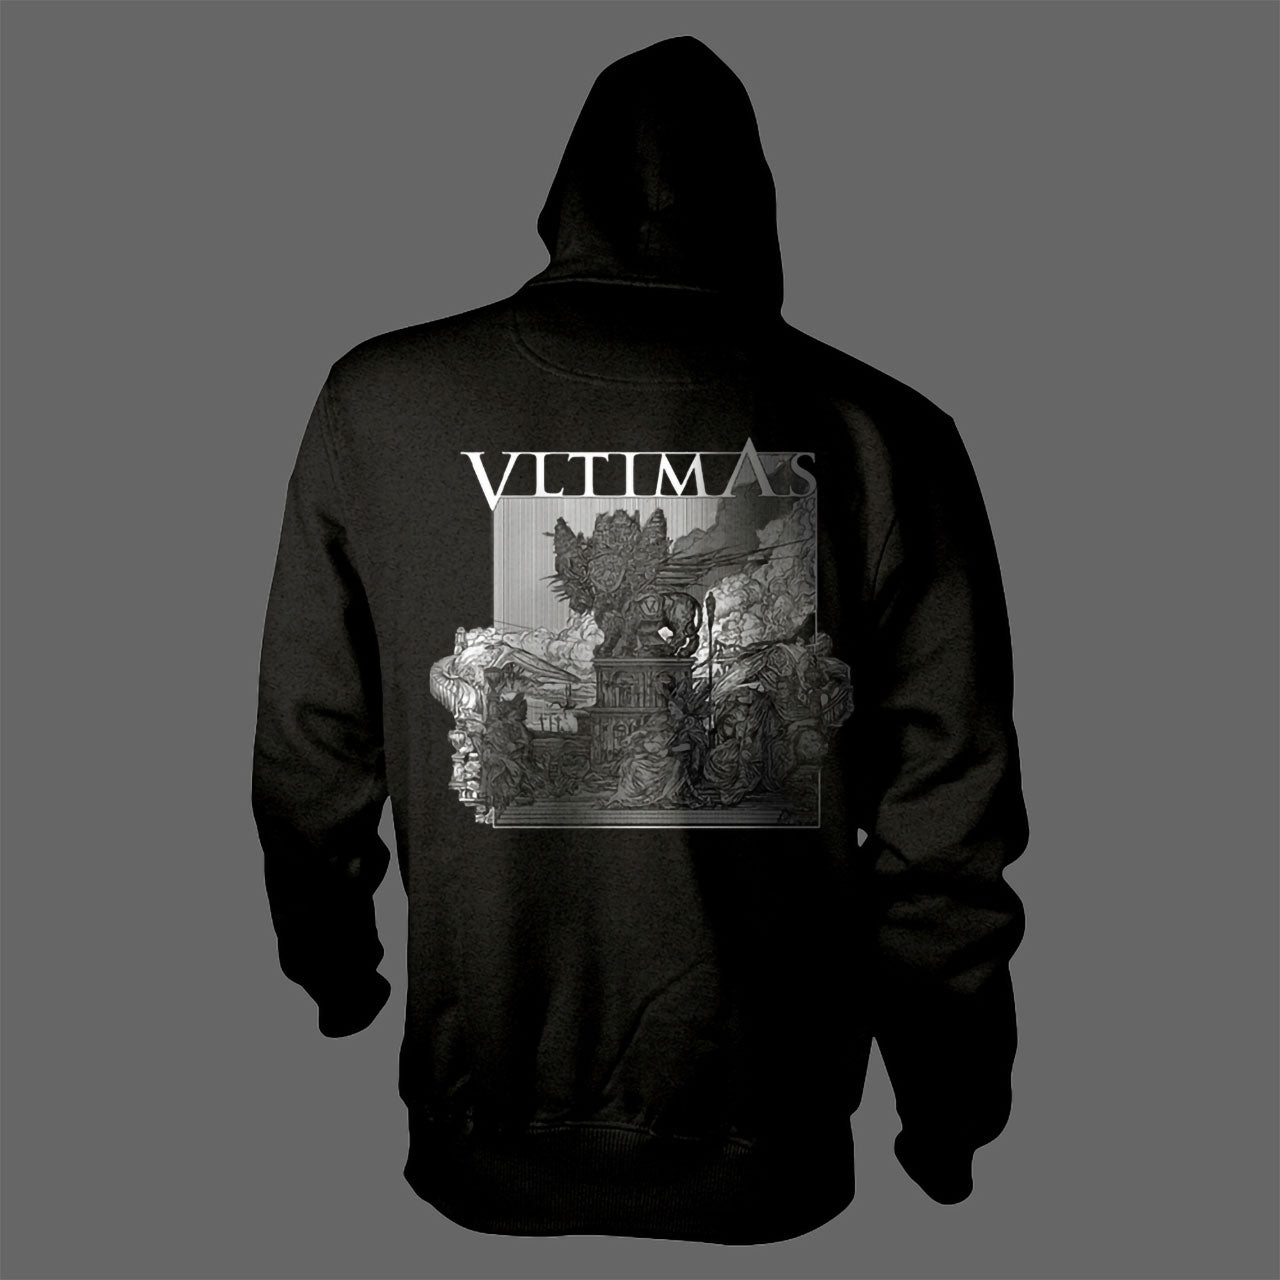 Vltimas - Something Wicked Marches In (Full Zip Hoodie)